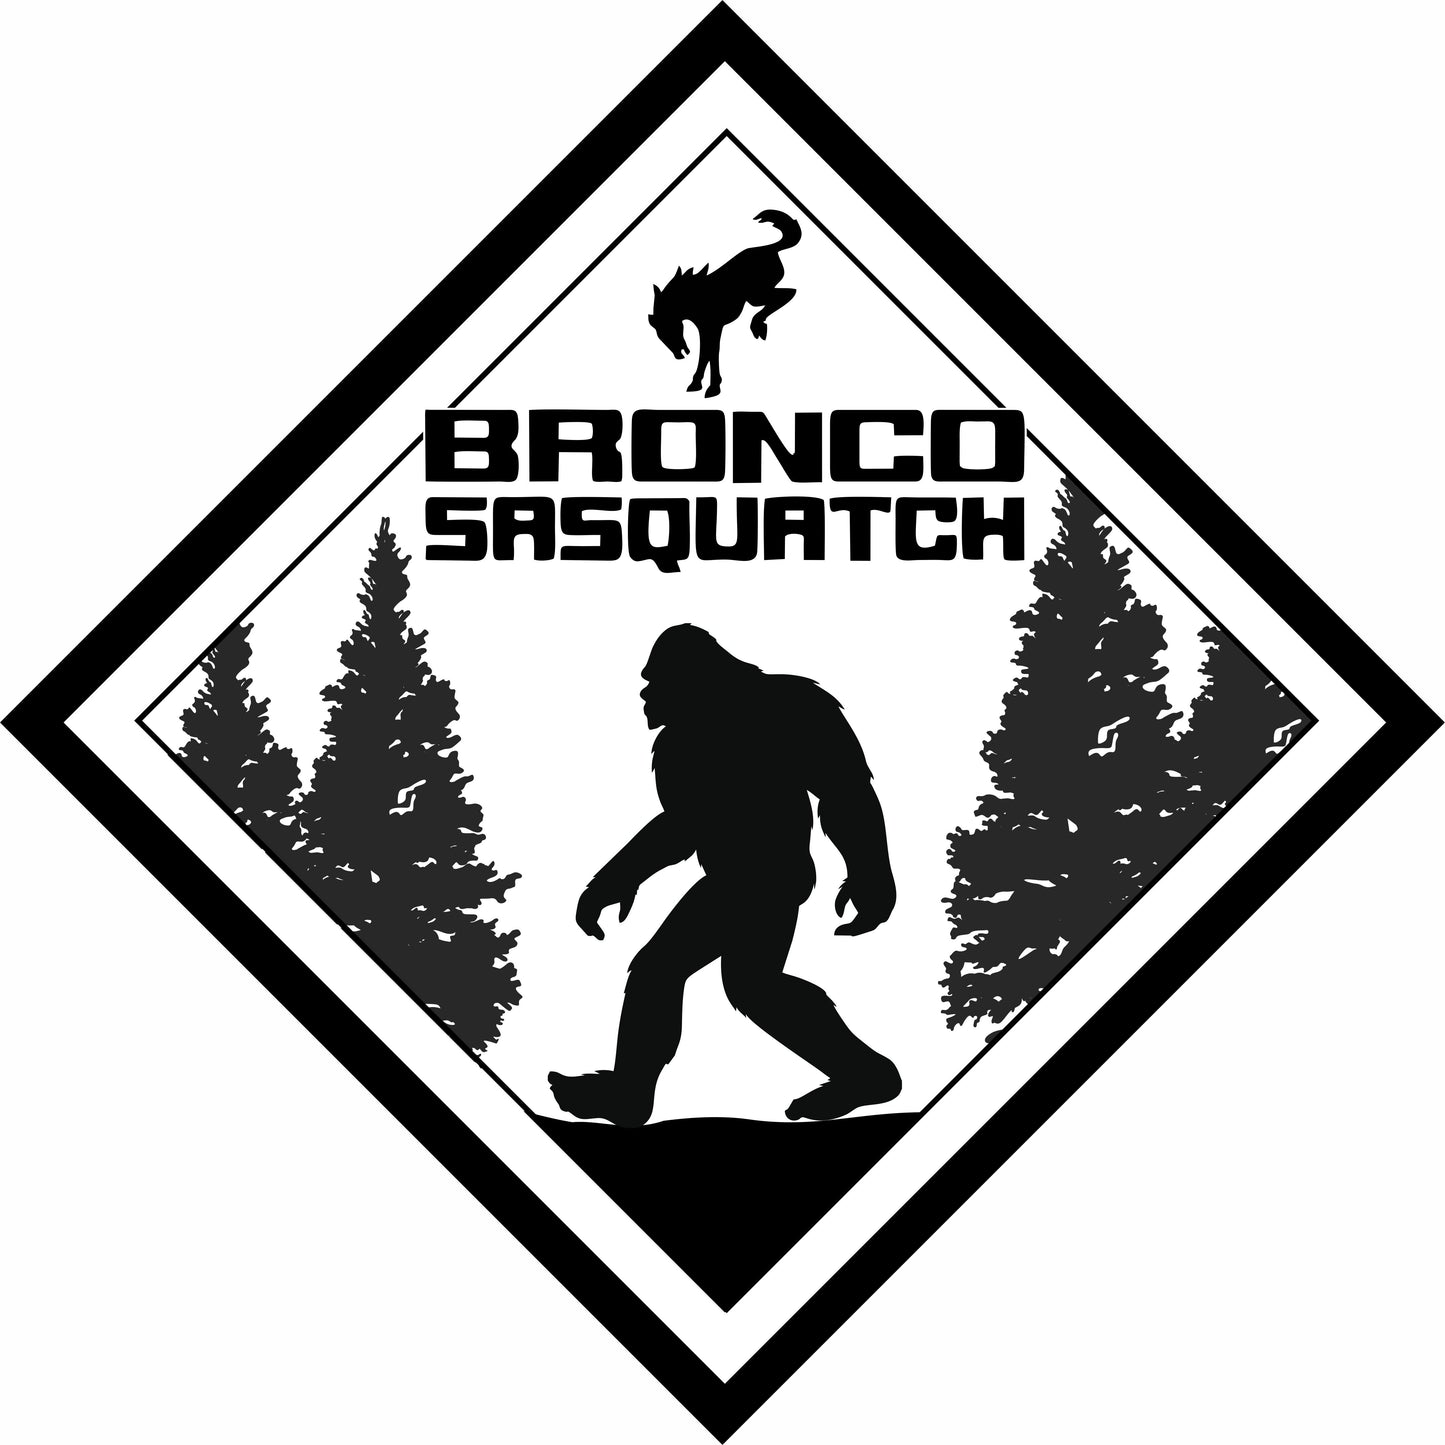 Bronco Sasquatch Yield Sign